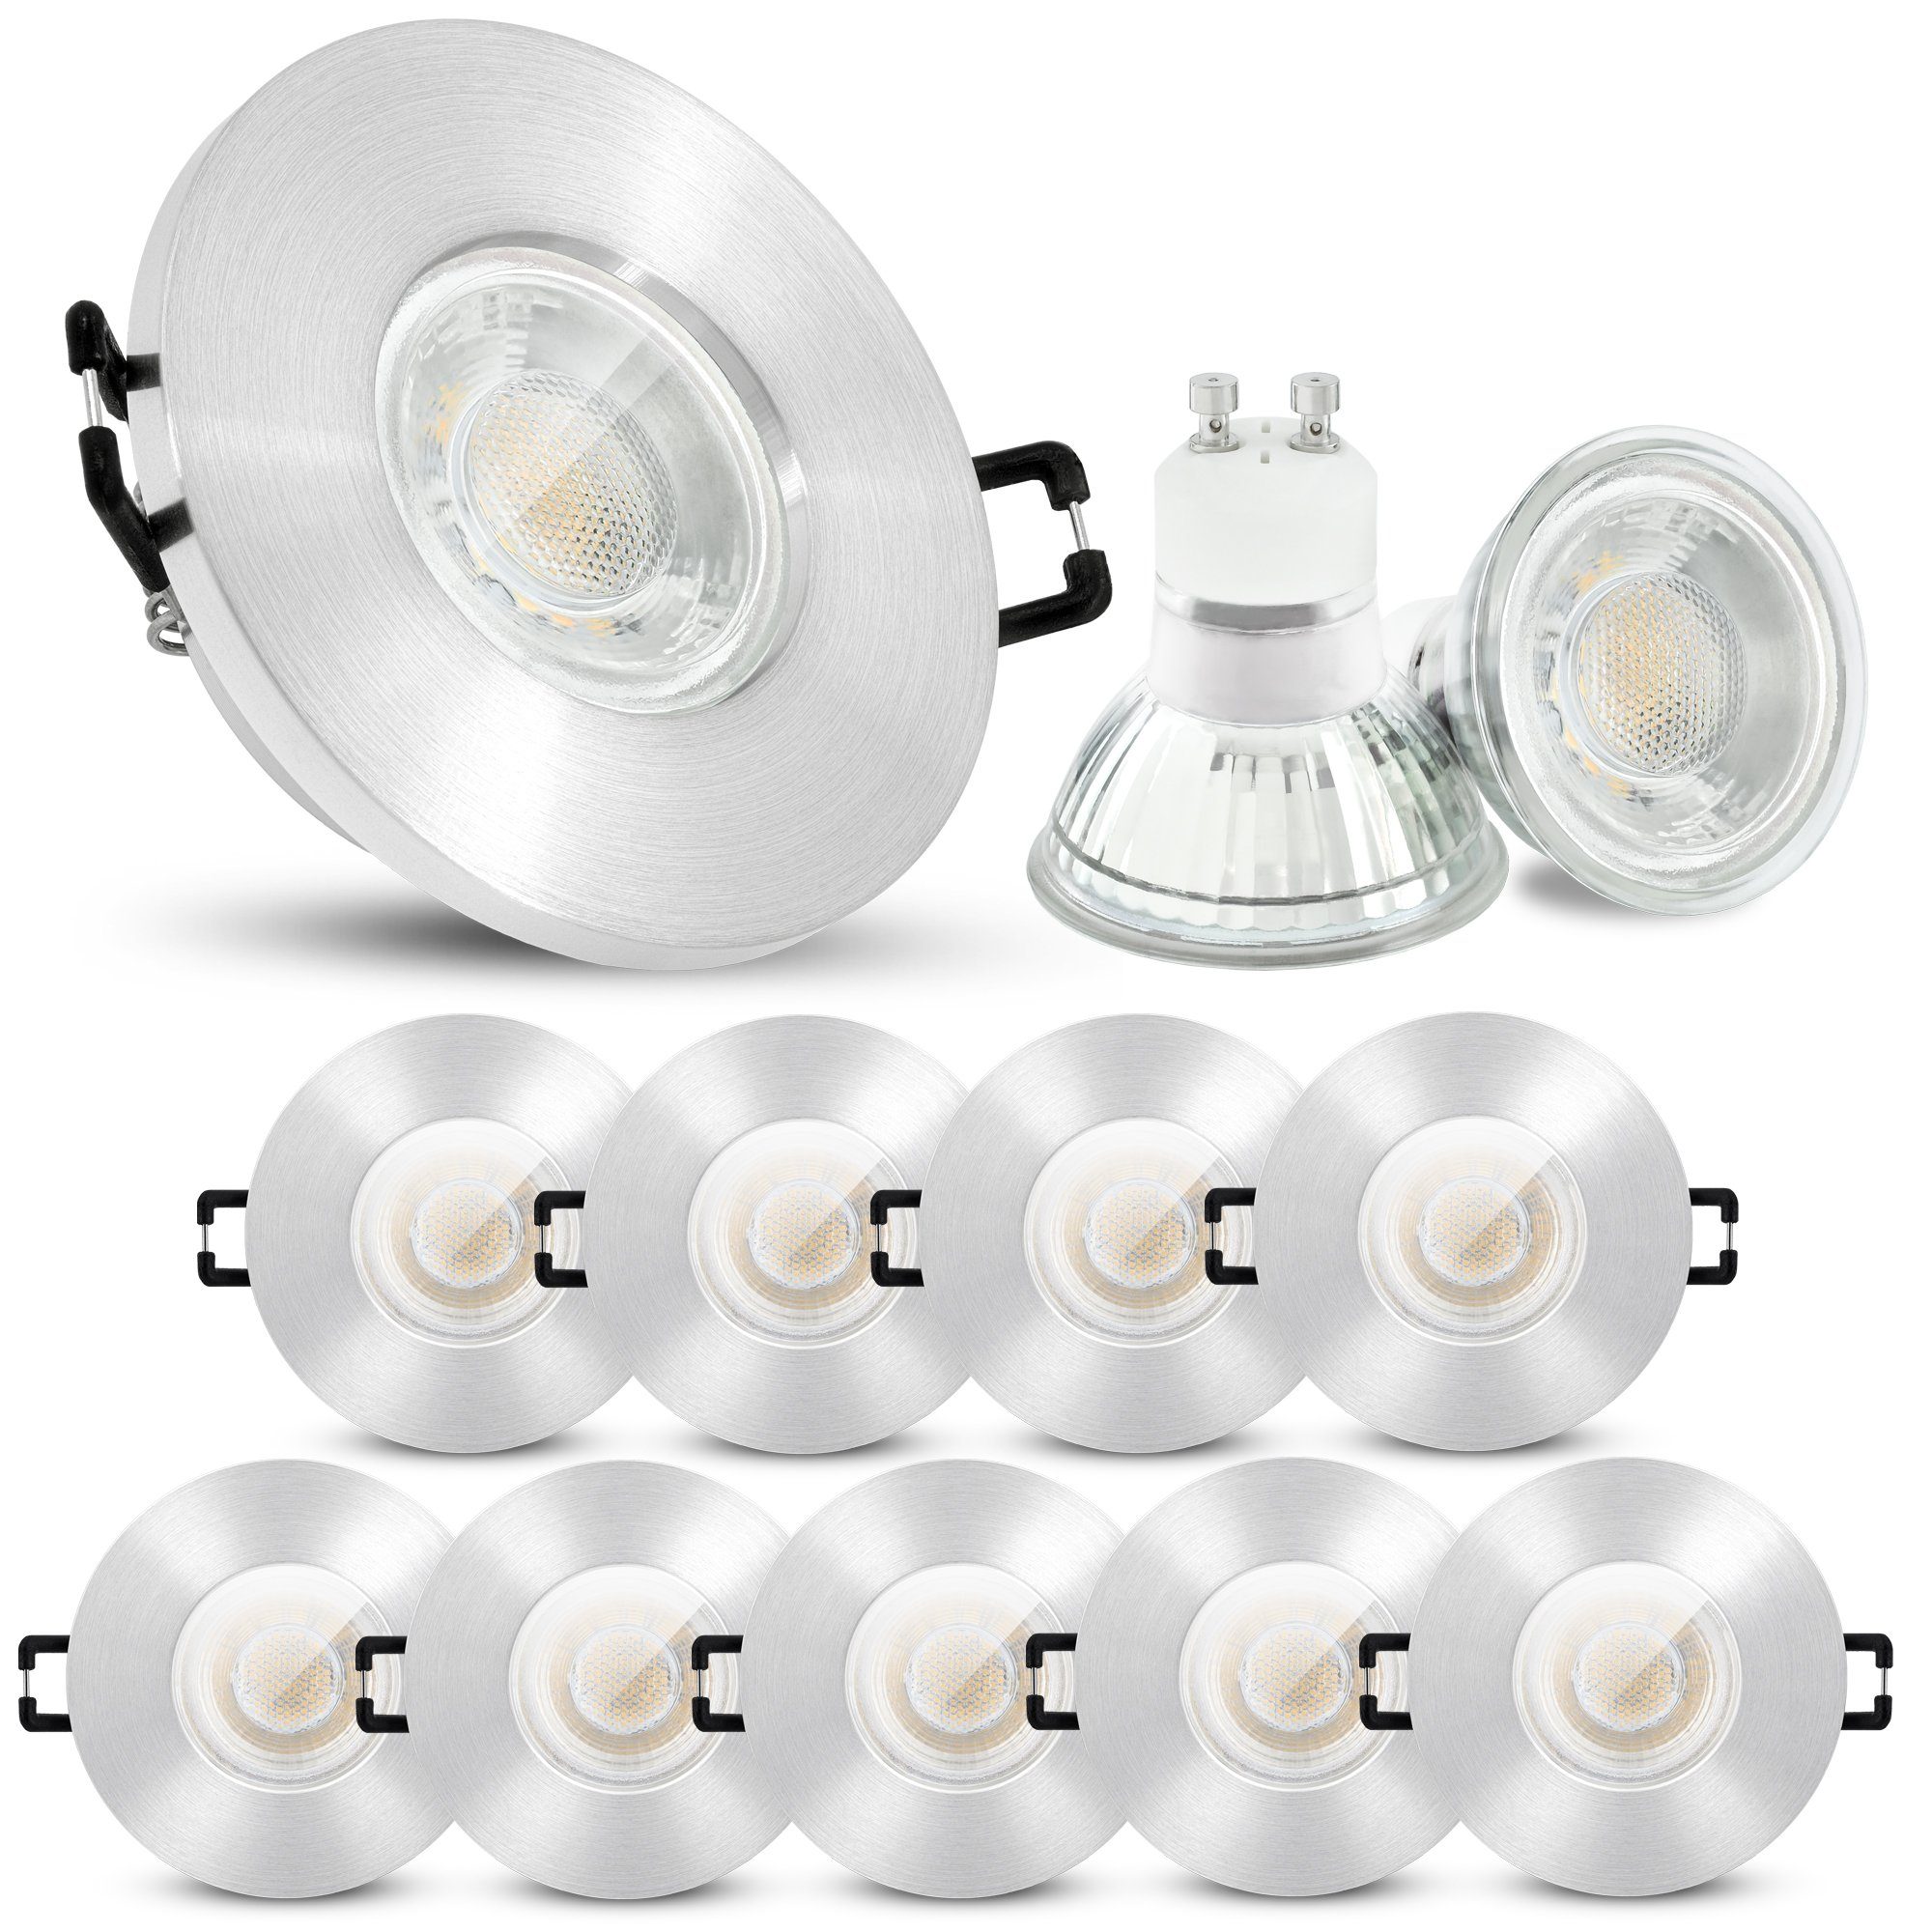 10 x LED Einbaustrahler Set dimmbar 230V 6W GU10 Einbau-leuchte-spot-lampe 